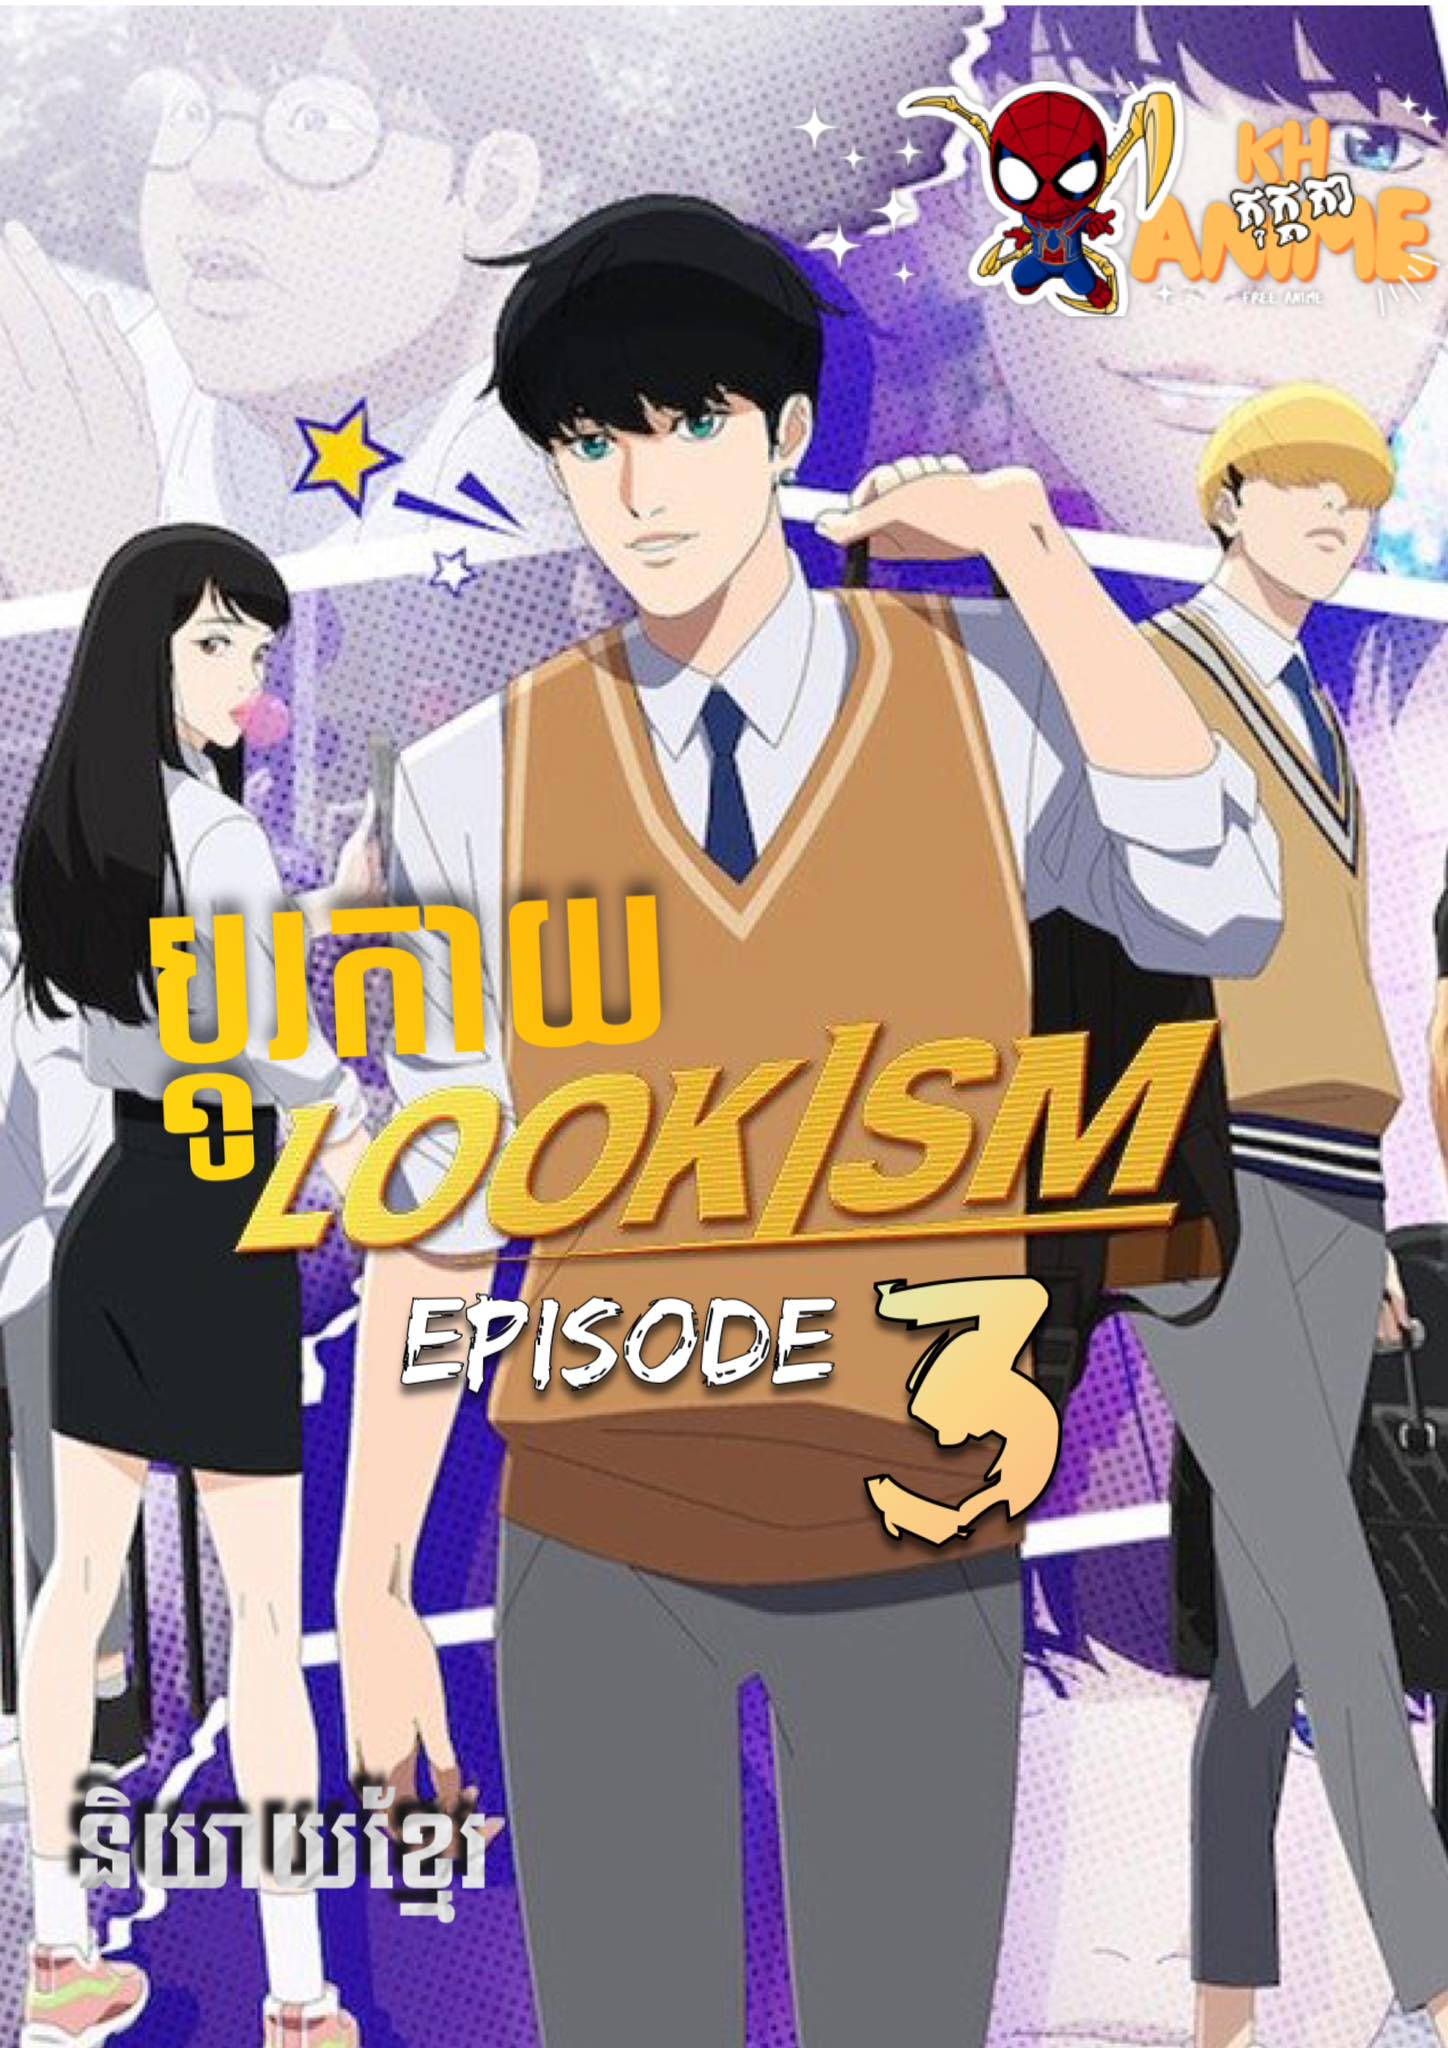 Lookism Season 1 Episode 3